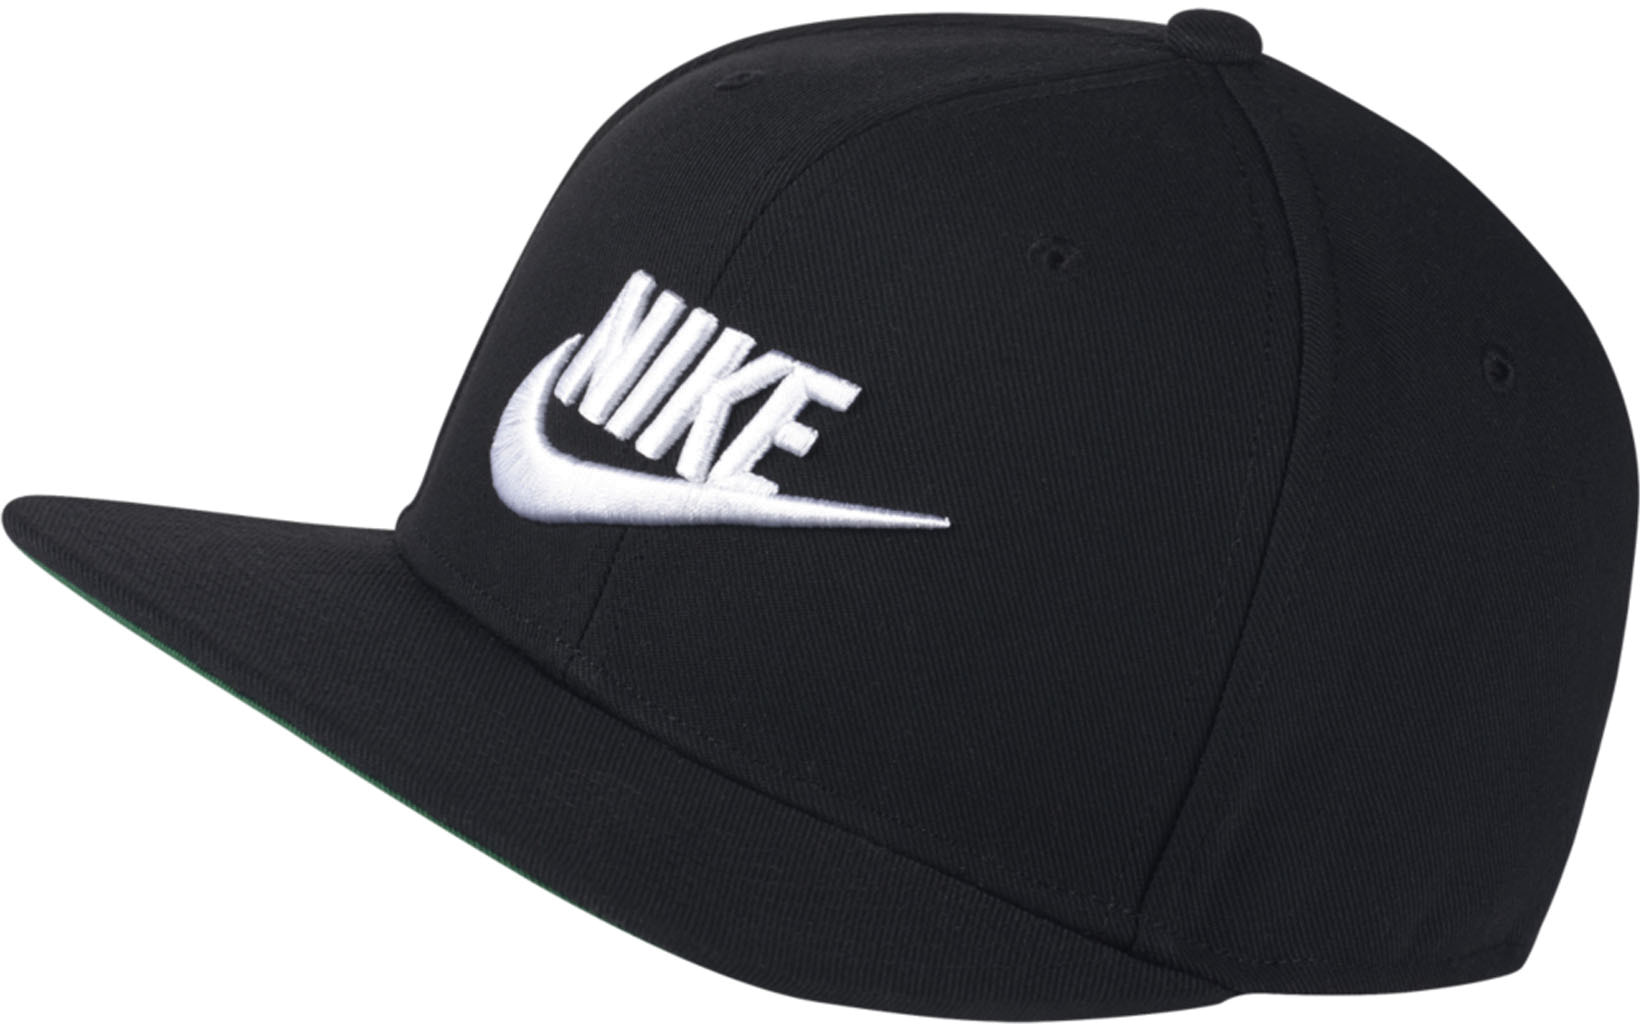 Бейсболка унисекс Nike Pro Cap черная, one size